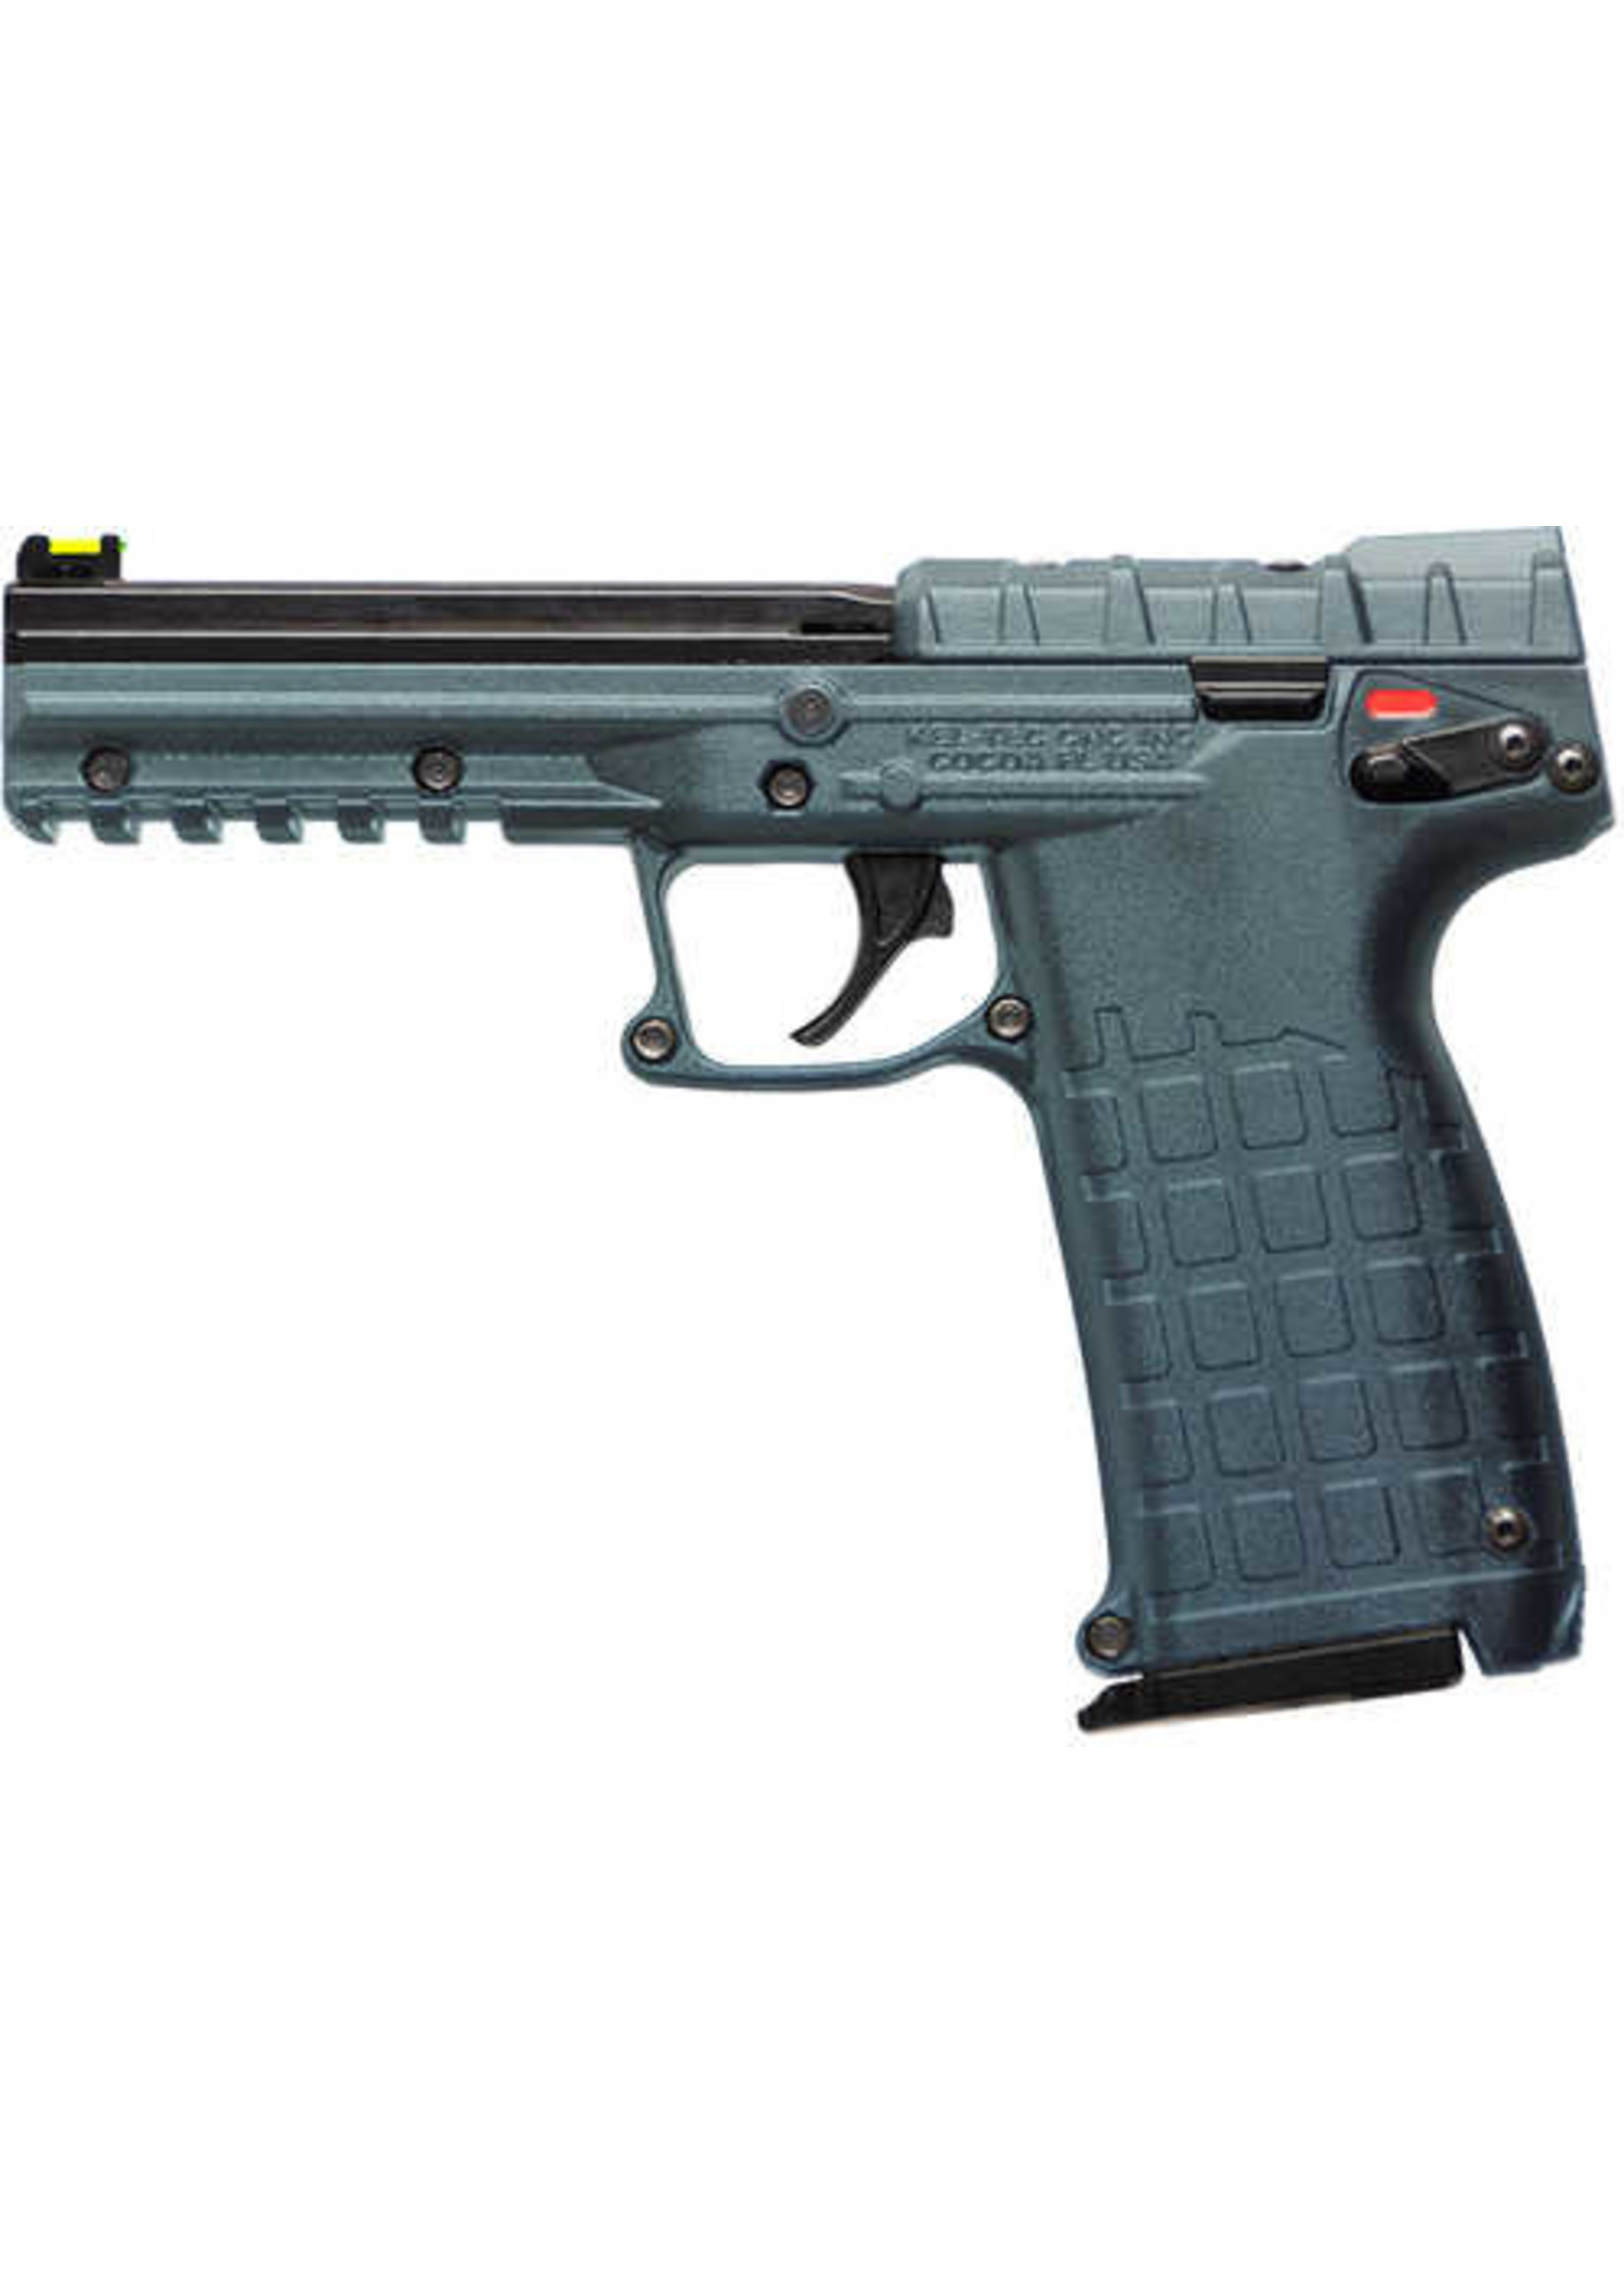 Kel-Tec (USED) KEL-TEC PMR-30 .22WMR pistol, 4.3 in barrel, 30 rd capacity, blue polymer